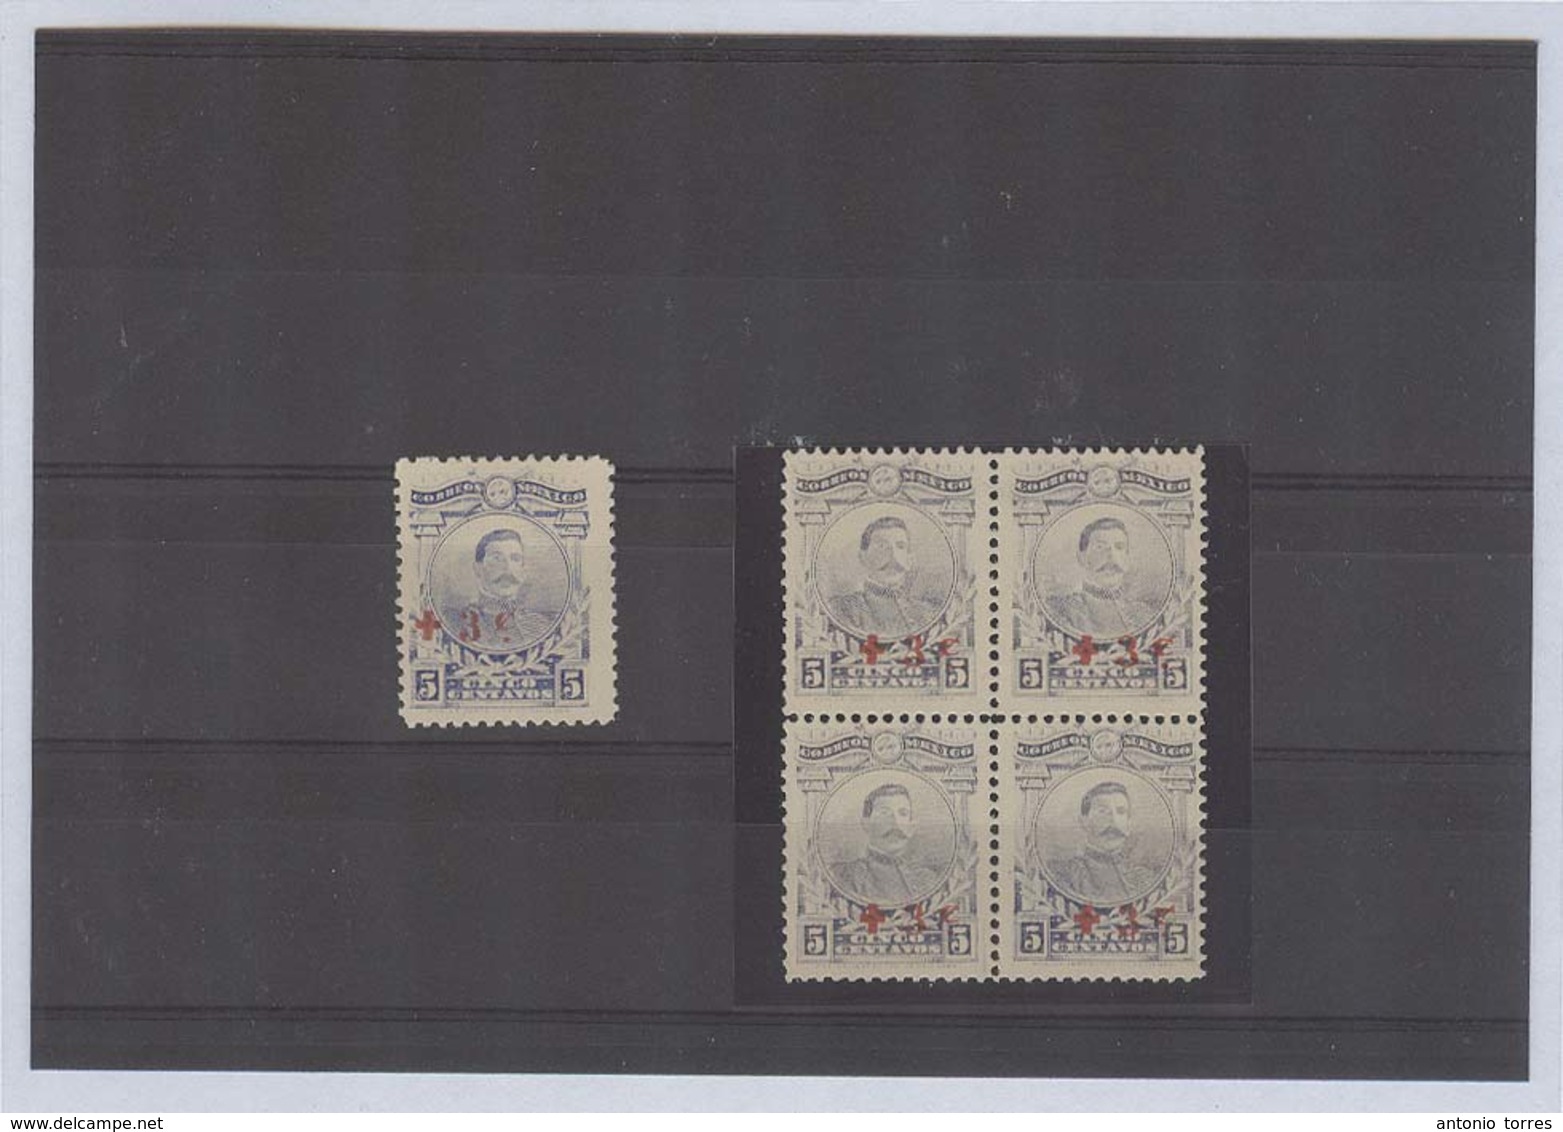 MEXICO. 1918. Sc B1* Semipostal Single + Block Of Four. Fine Mint. - Mexique